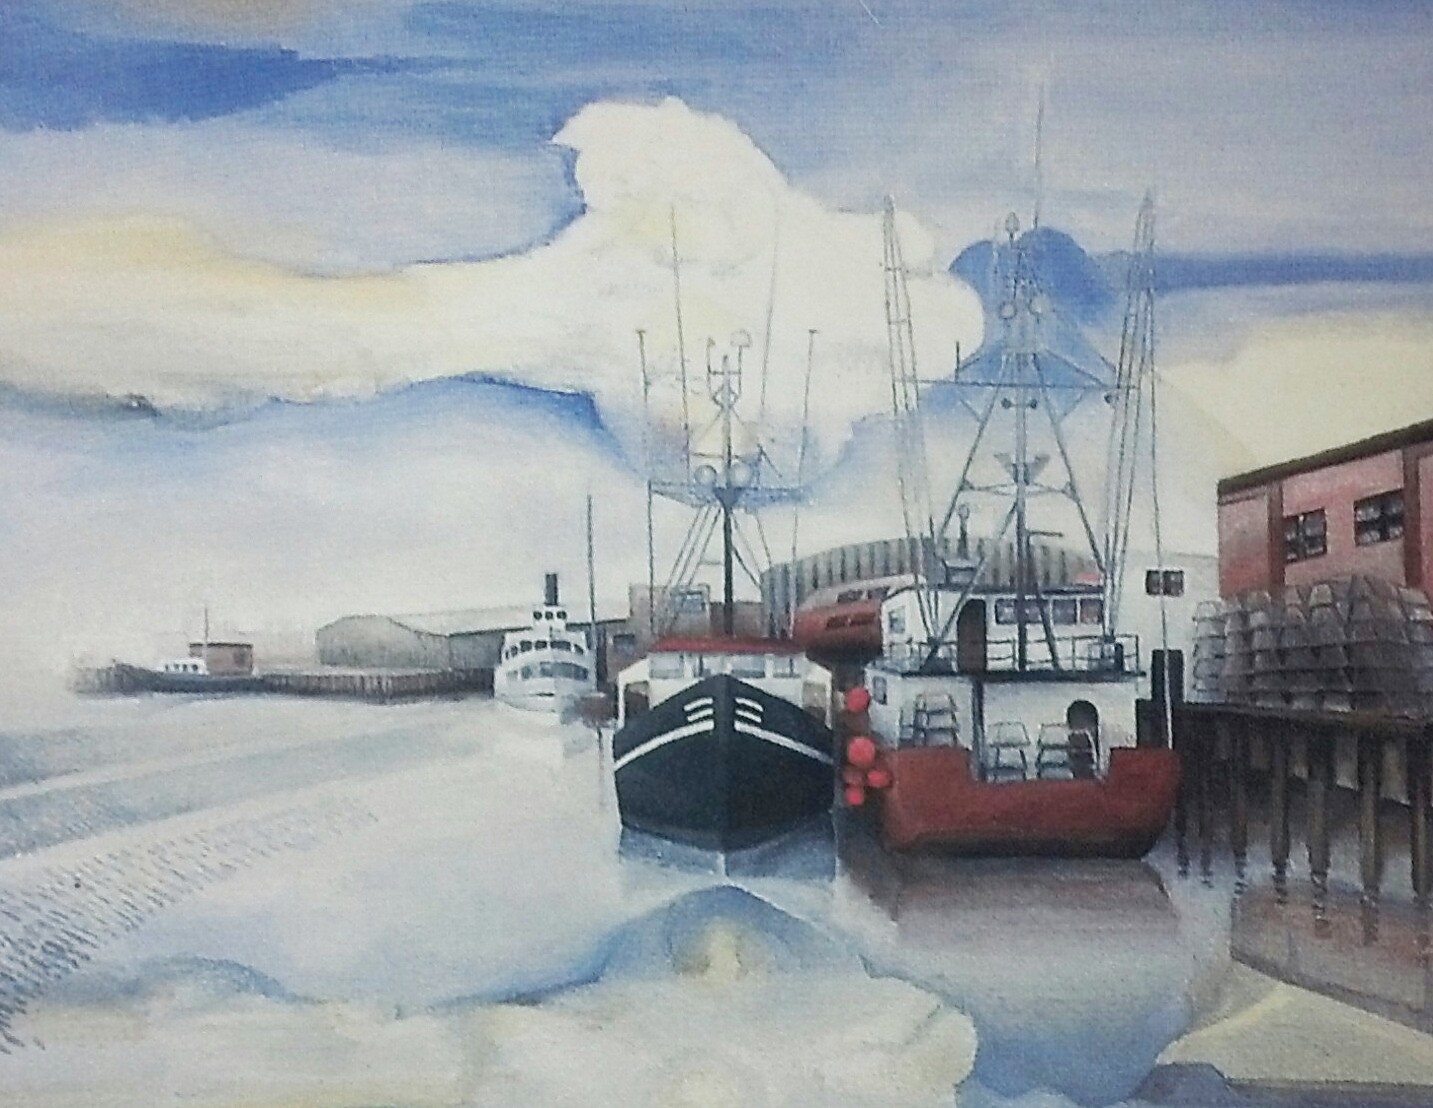   "Storm", oil, 16" x 12", 2000  